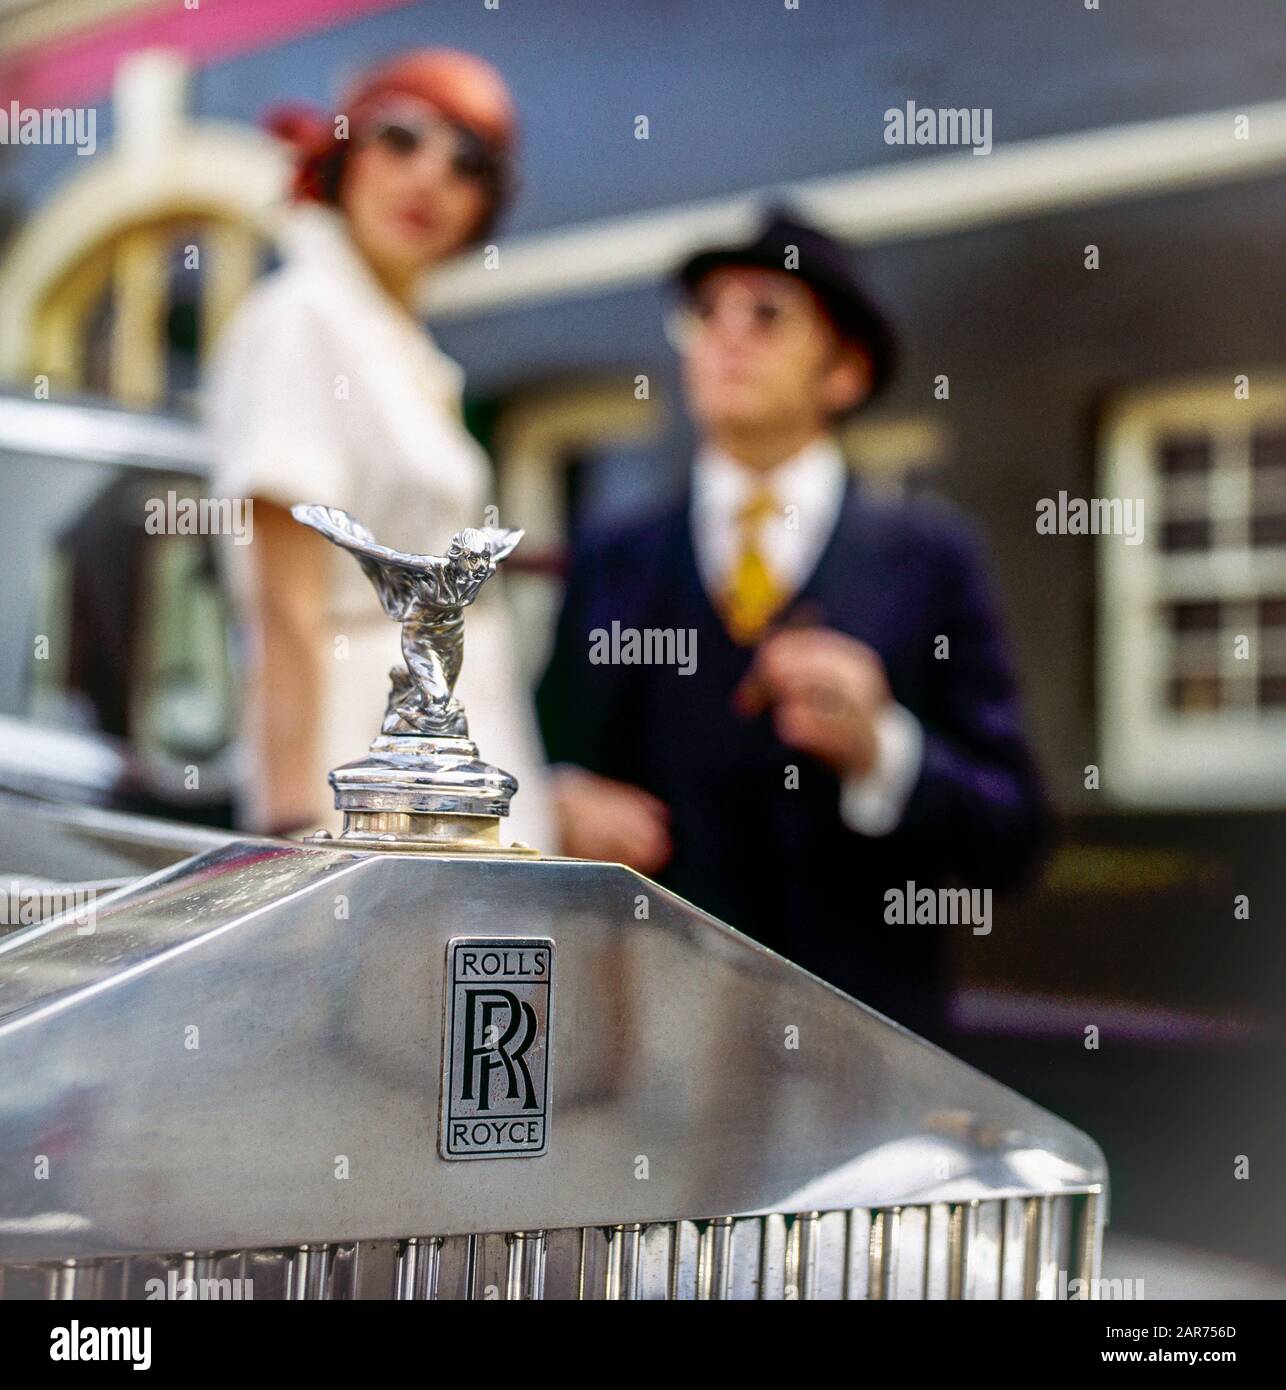 London 1970s, 1936 Rolls-Royce radiator grill, Spirit of Ecstasy statue, hood ornament, mascot,blurred elegant couple, England, UK, GB, Great Britain, Stock Photo